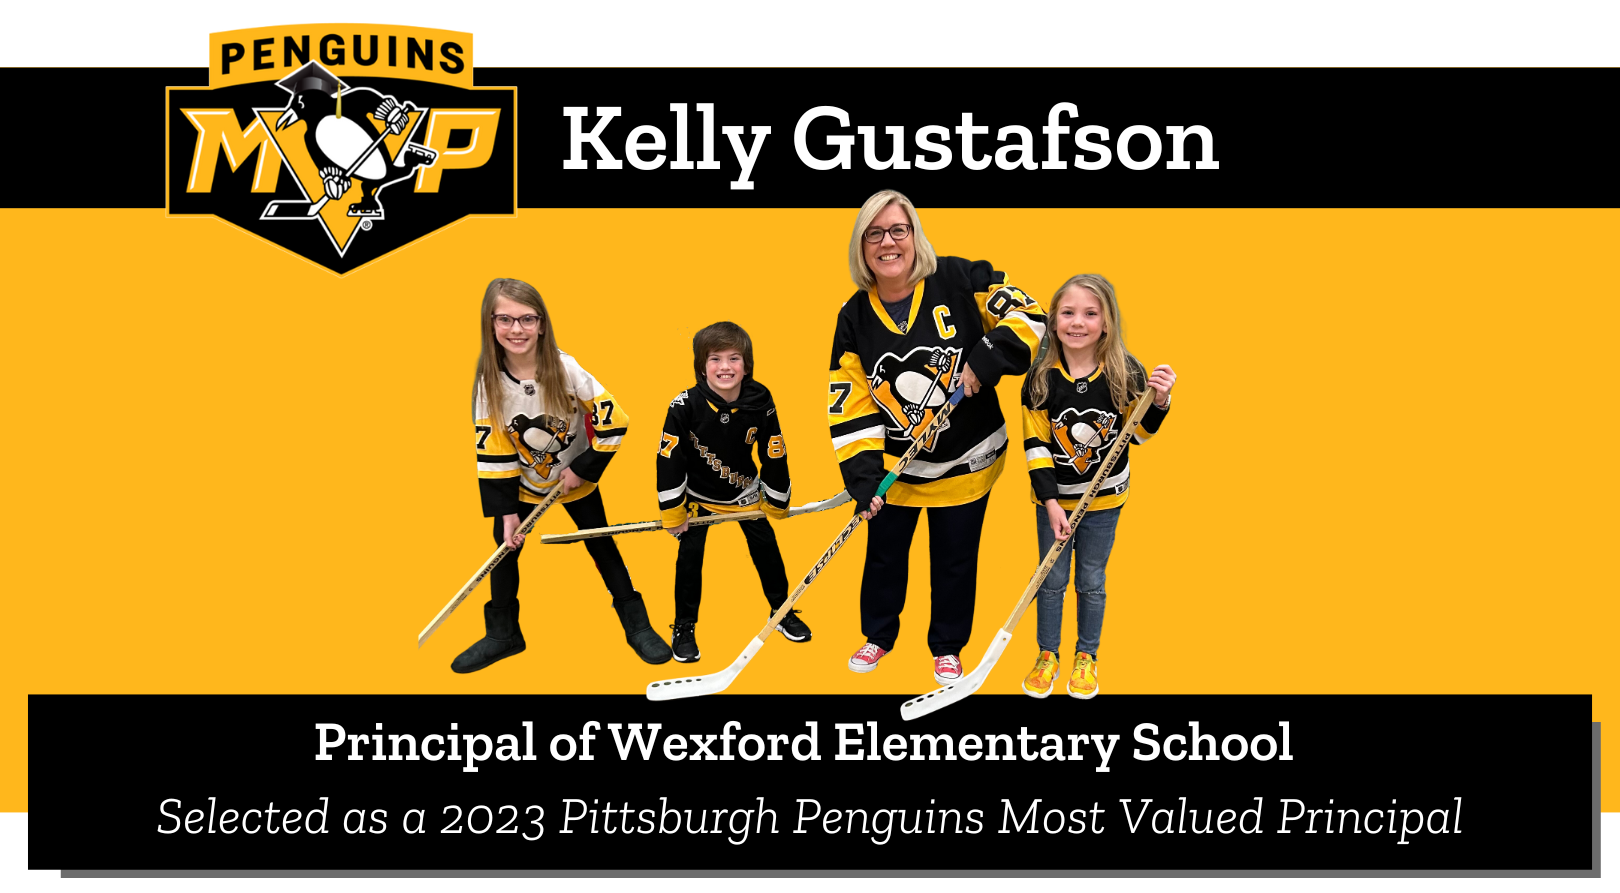 Pens MVP Kelly Gustafson, Principal of Wexford Elementary School